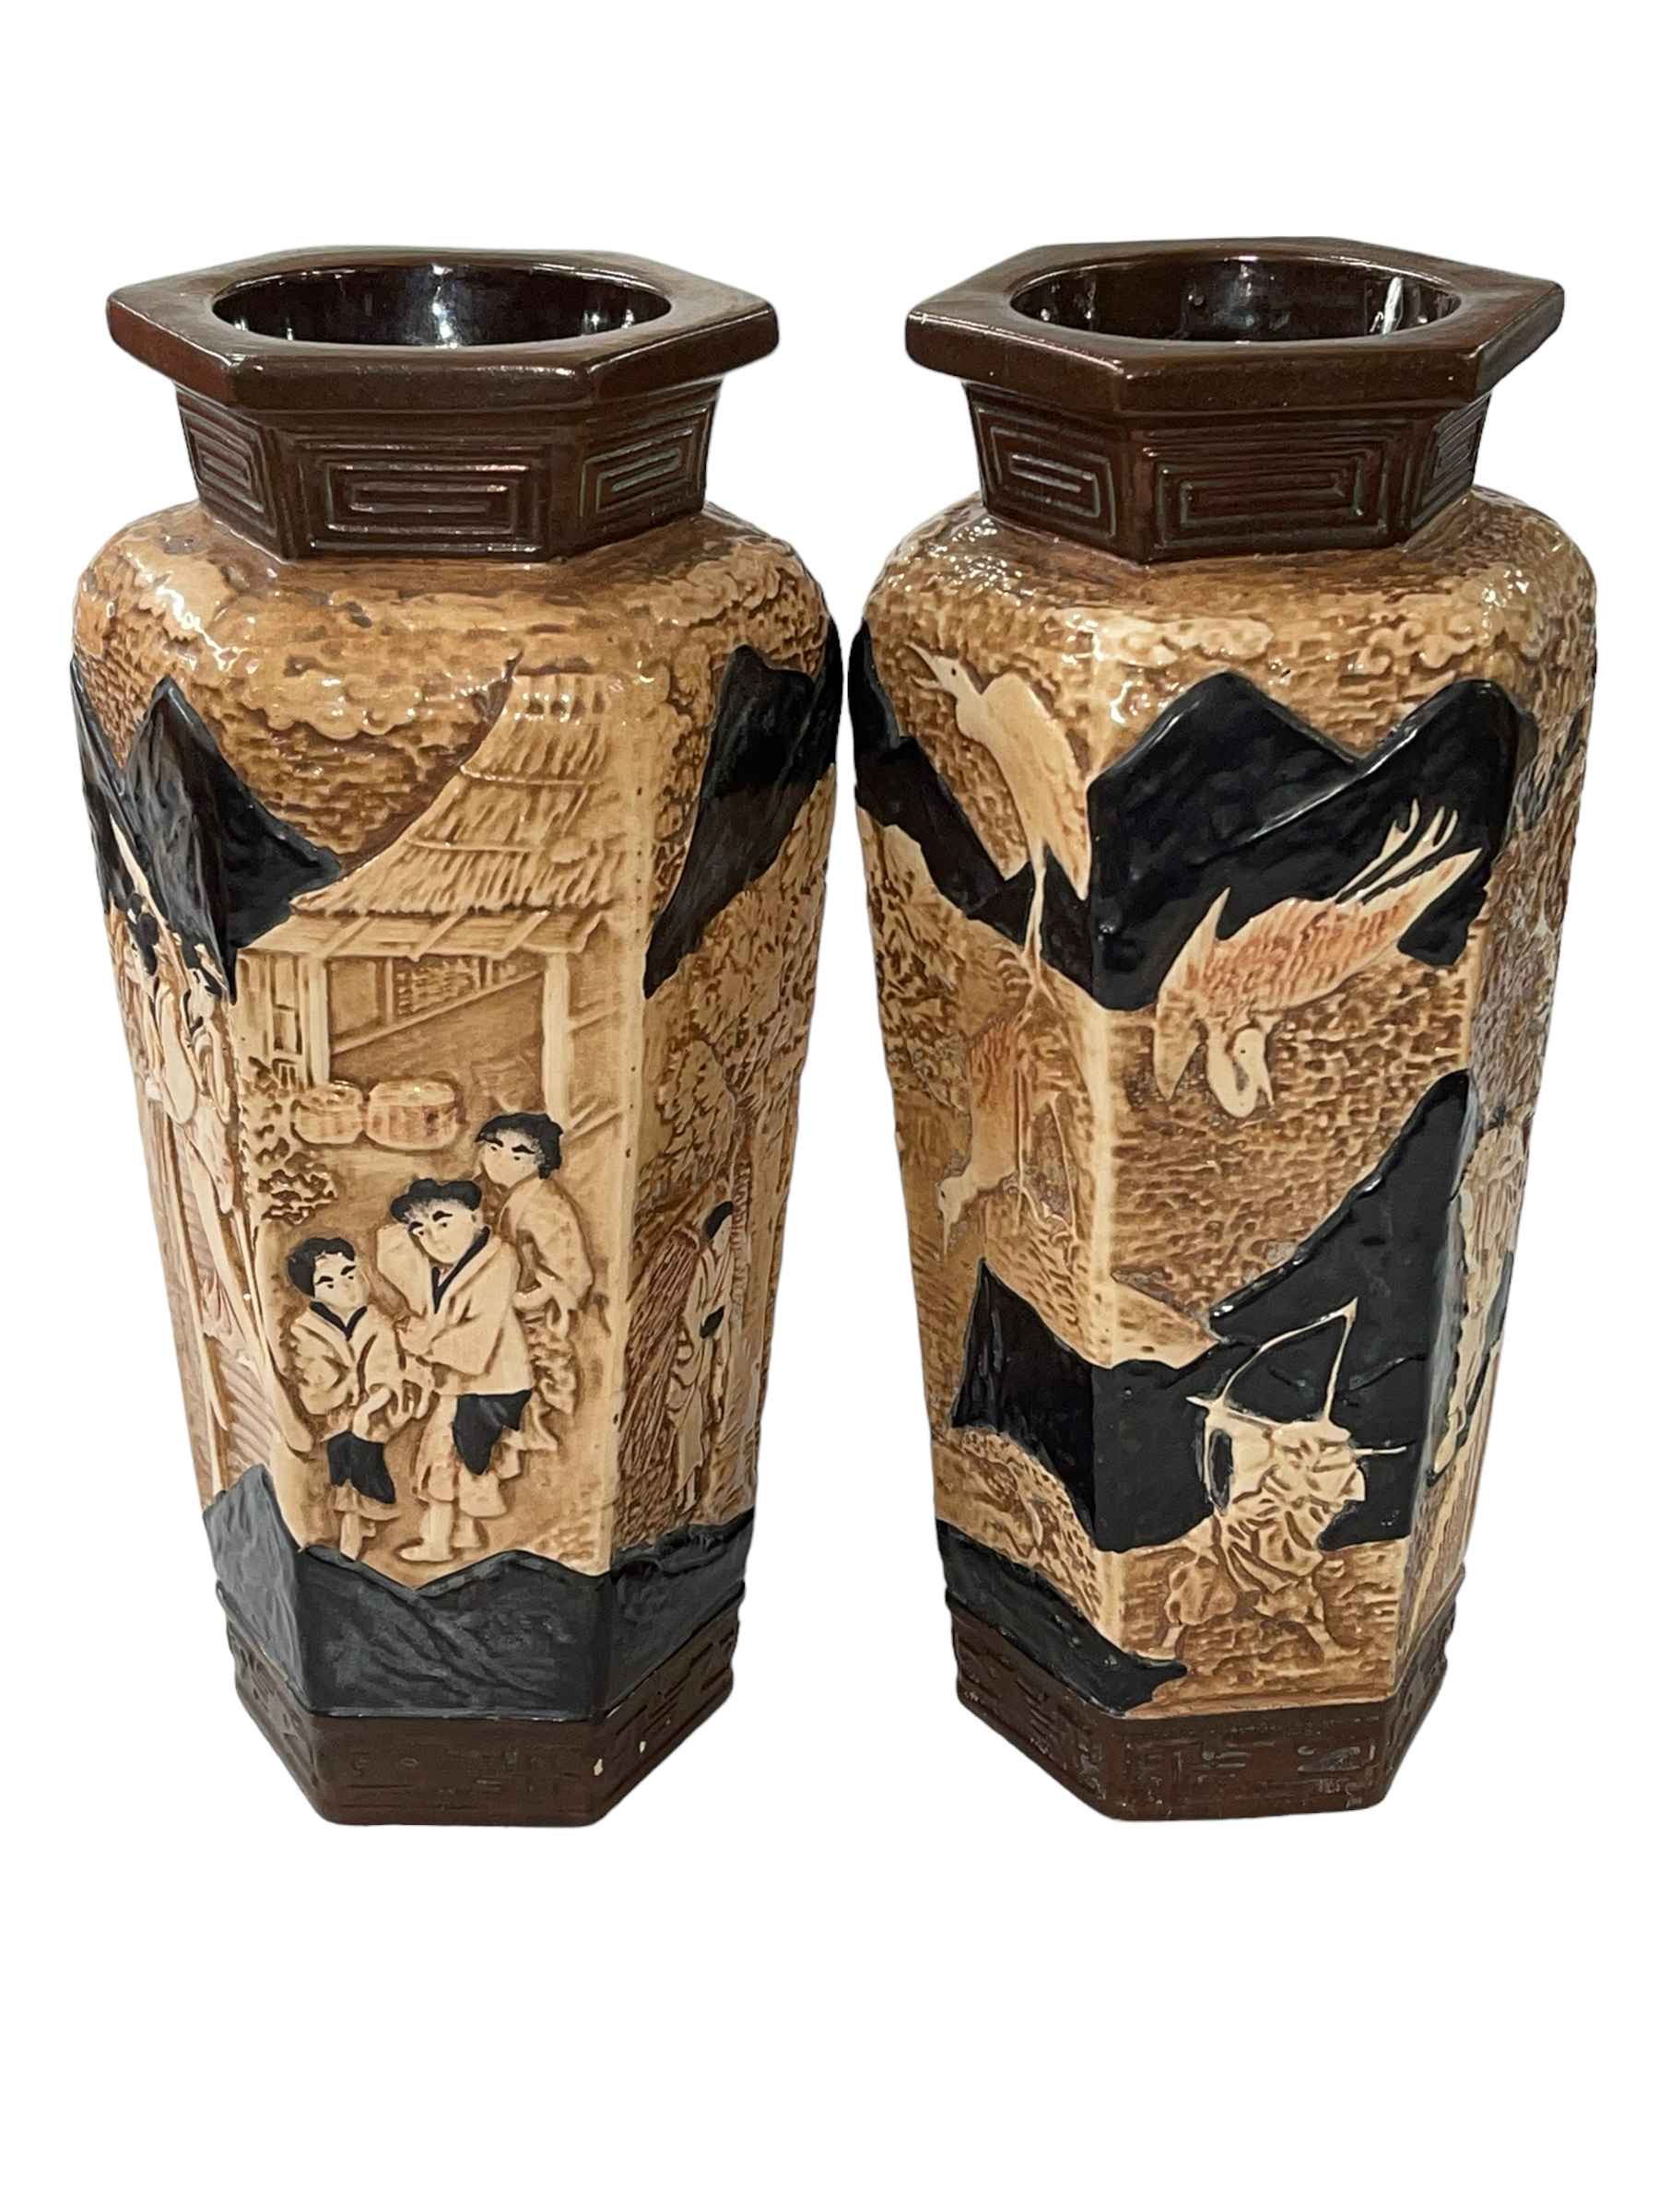 Pair of Bretby vases, 2270, 38cm high.